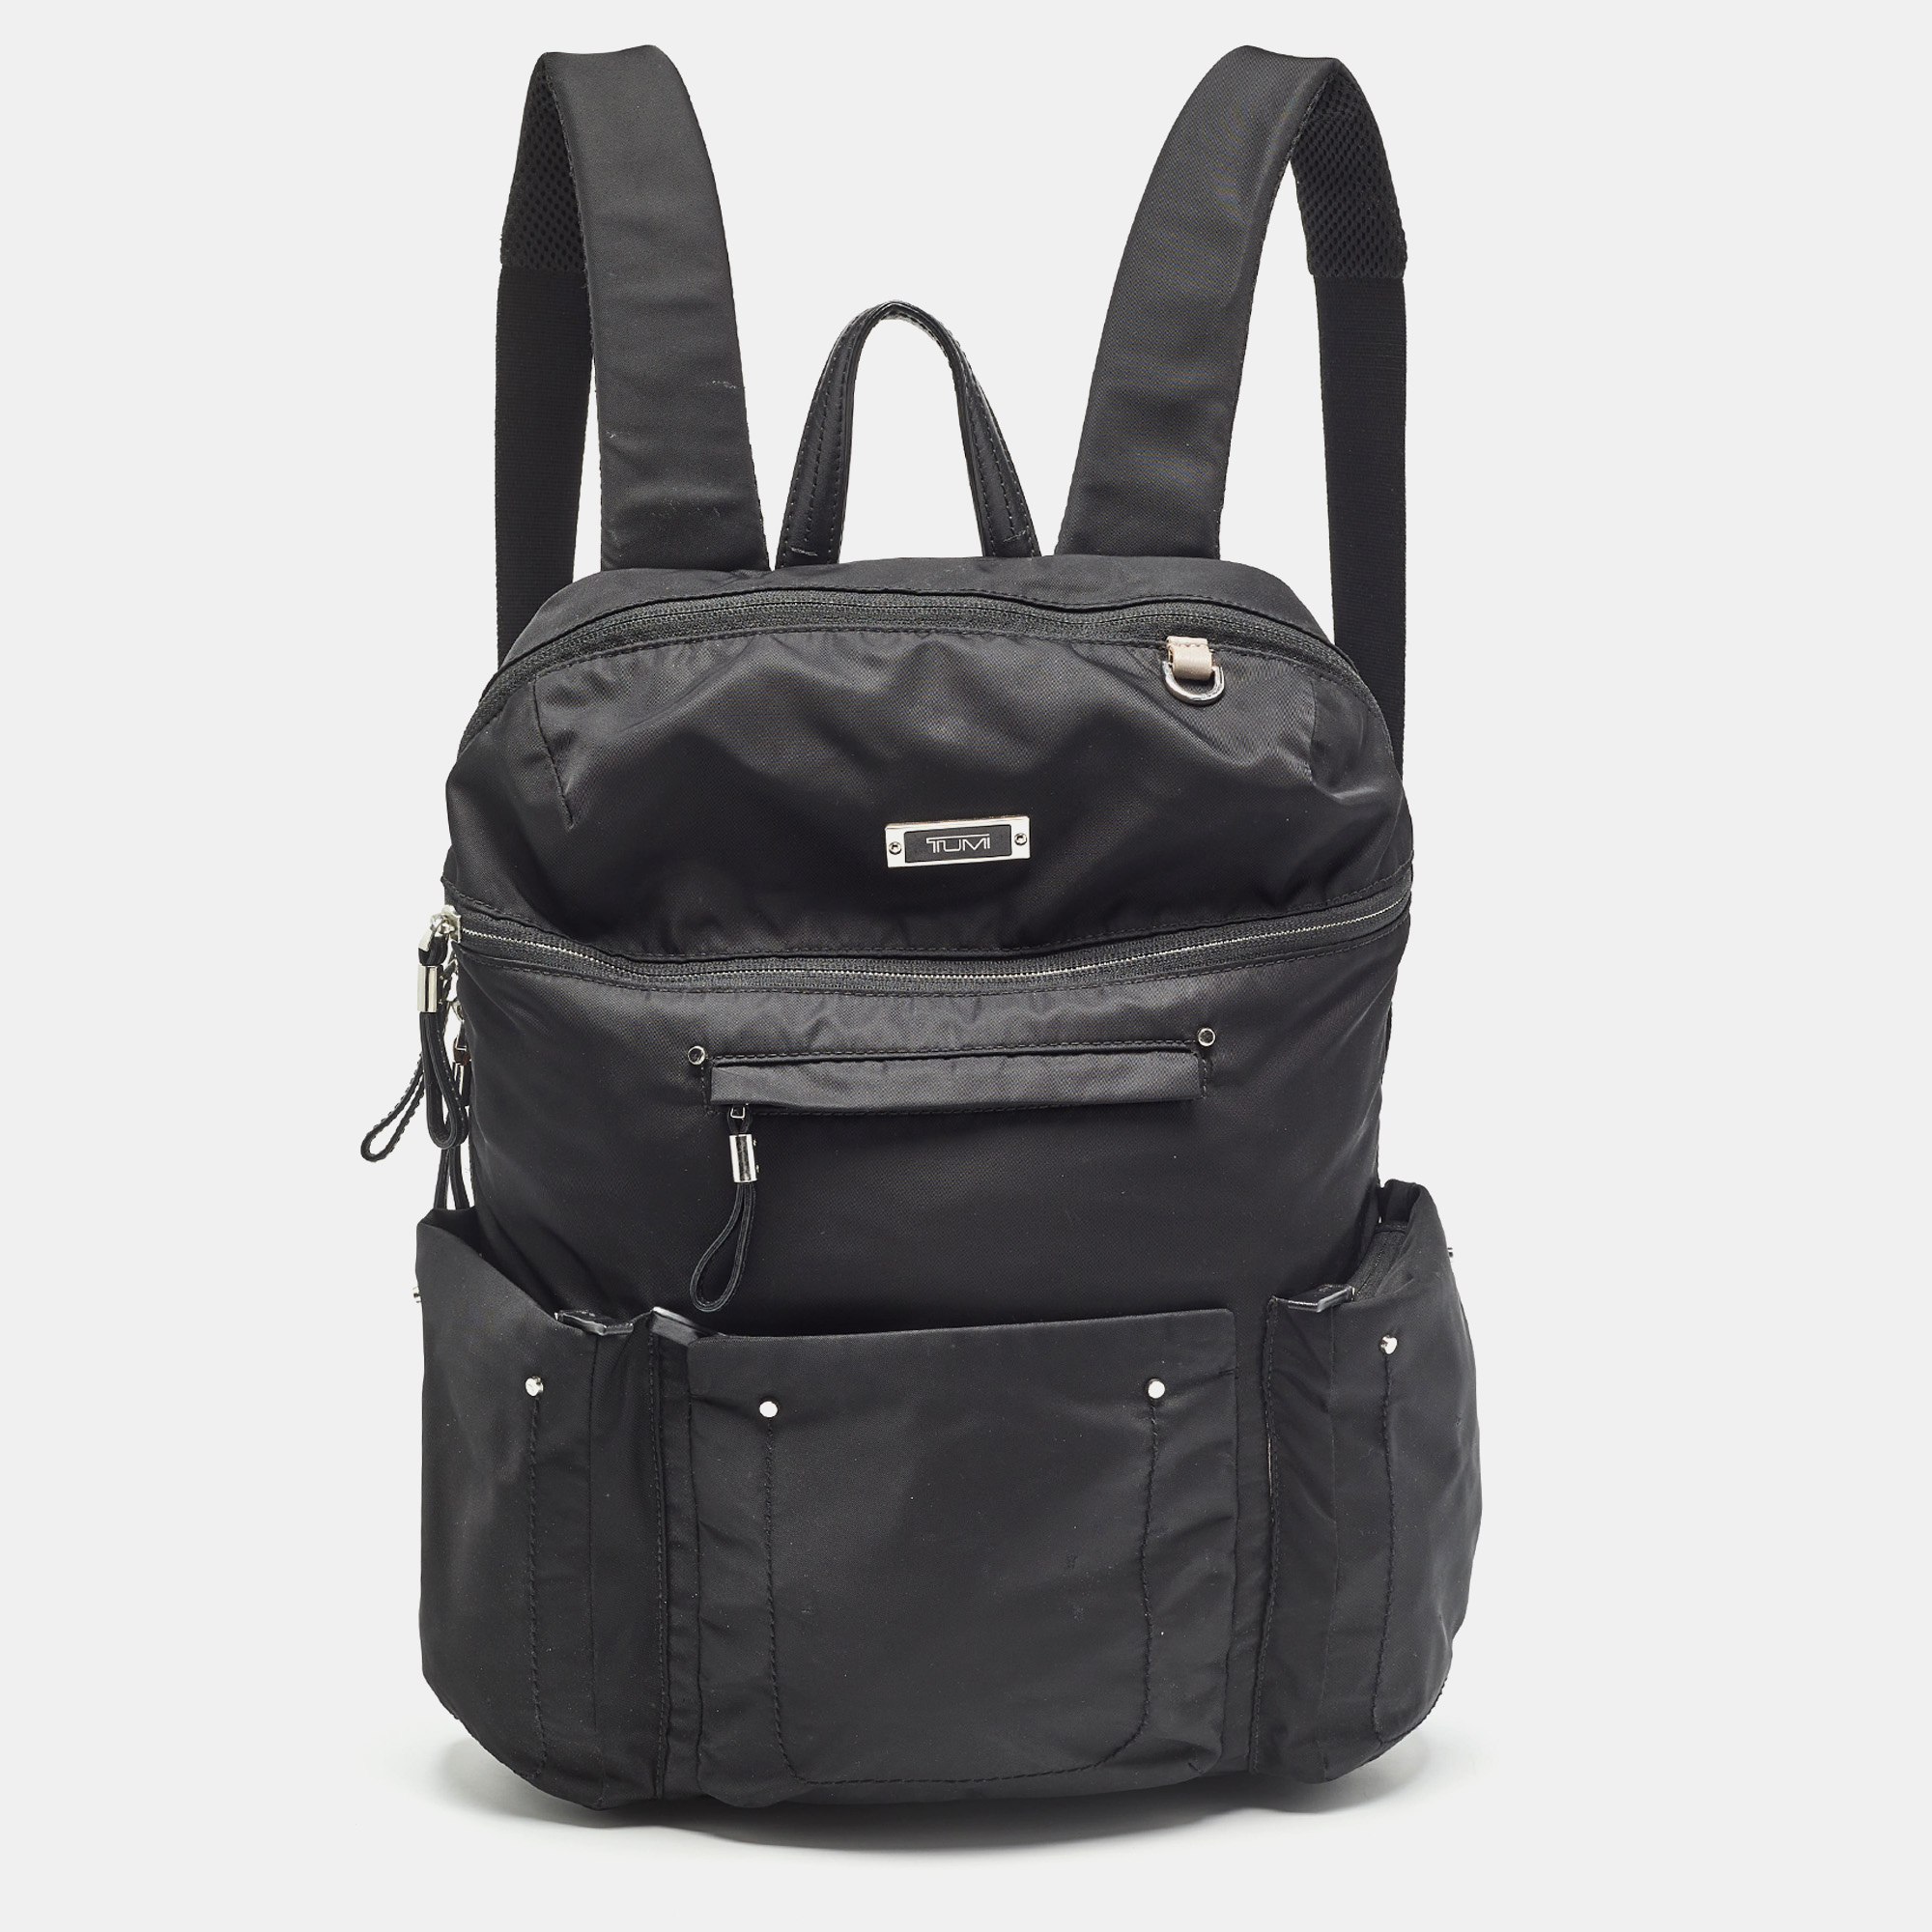 

TUMI Black Nylon Backpack